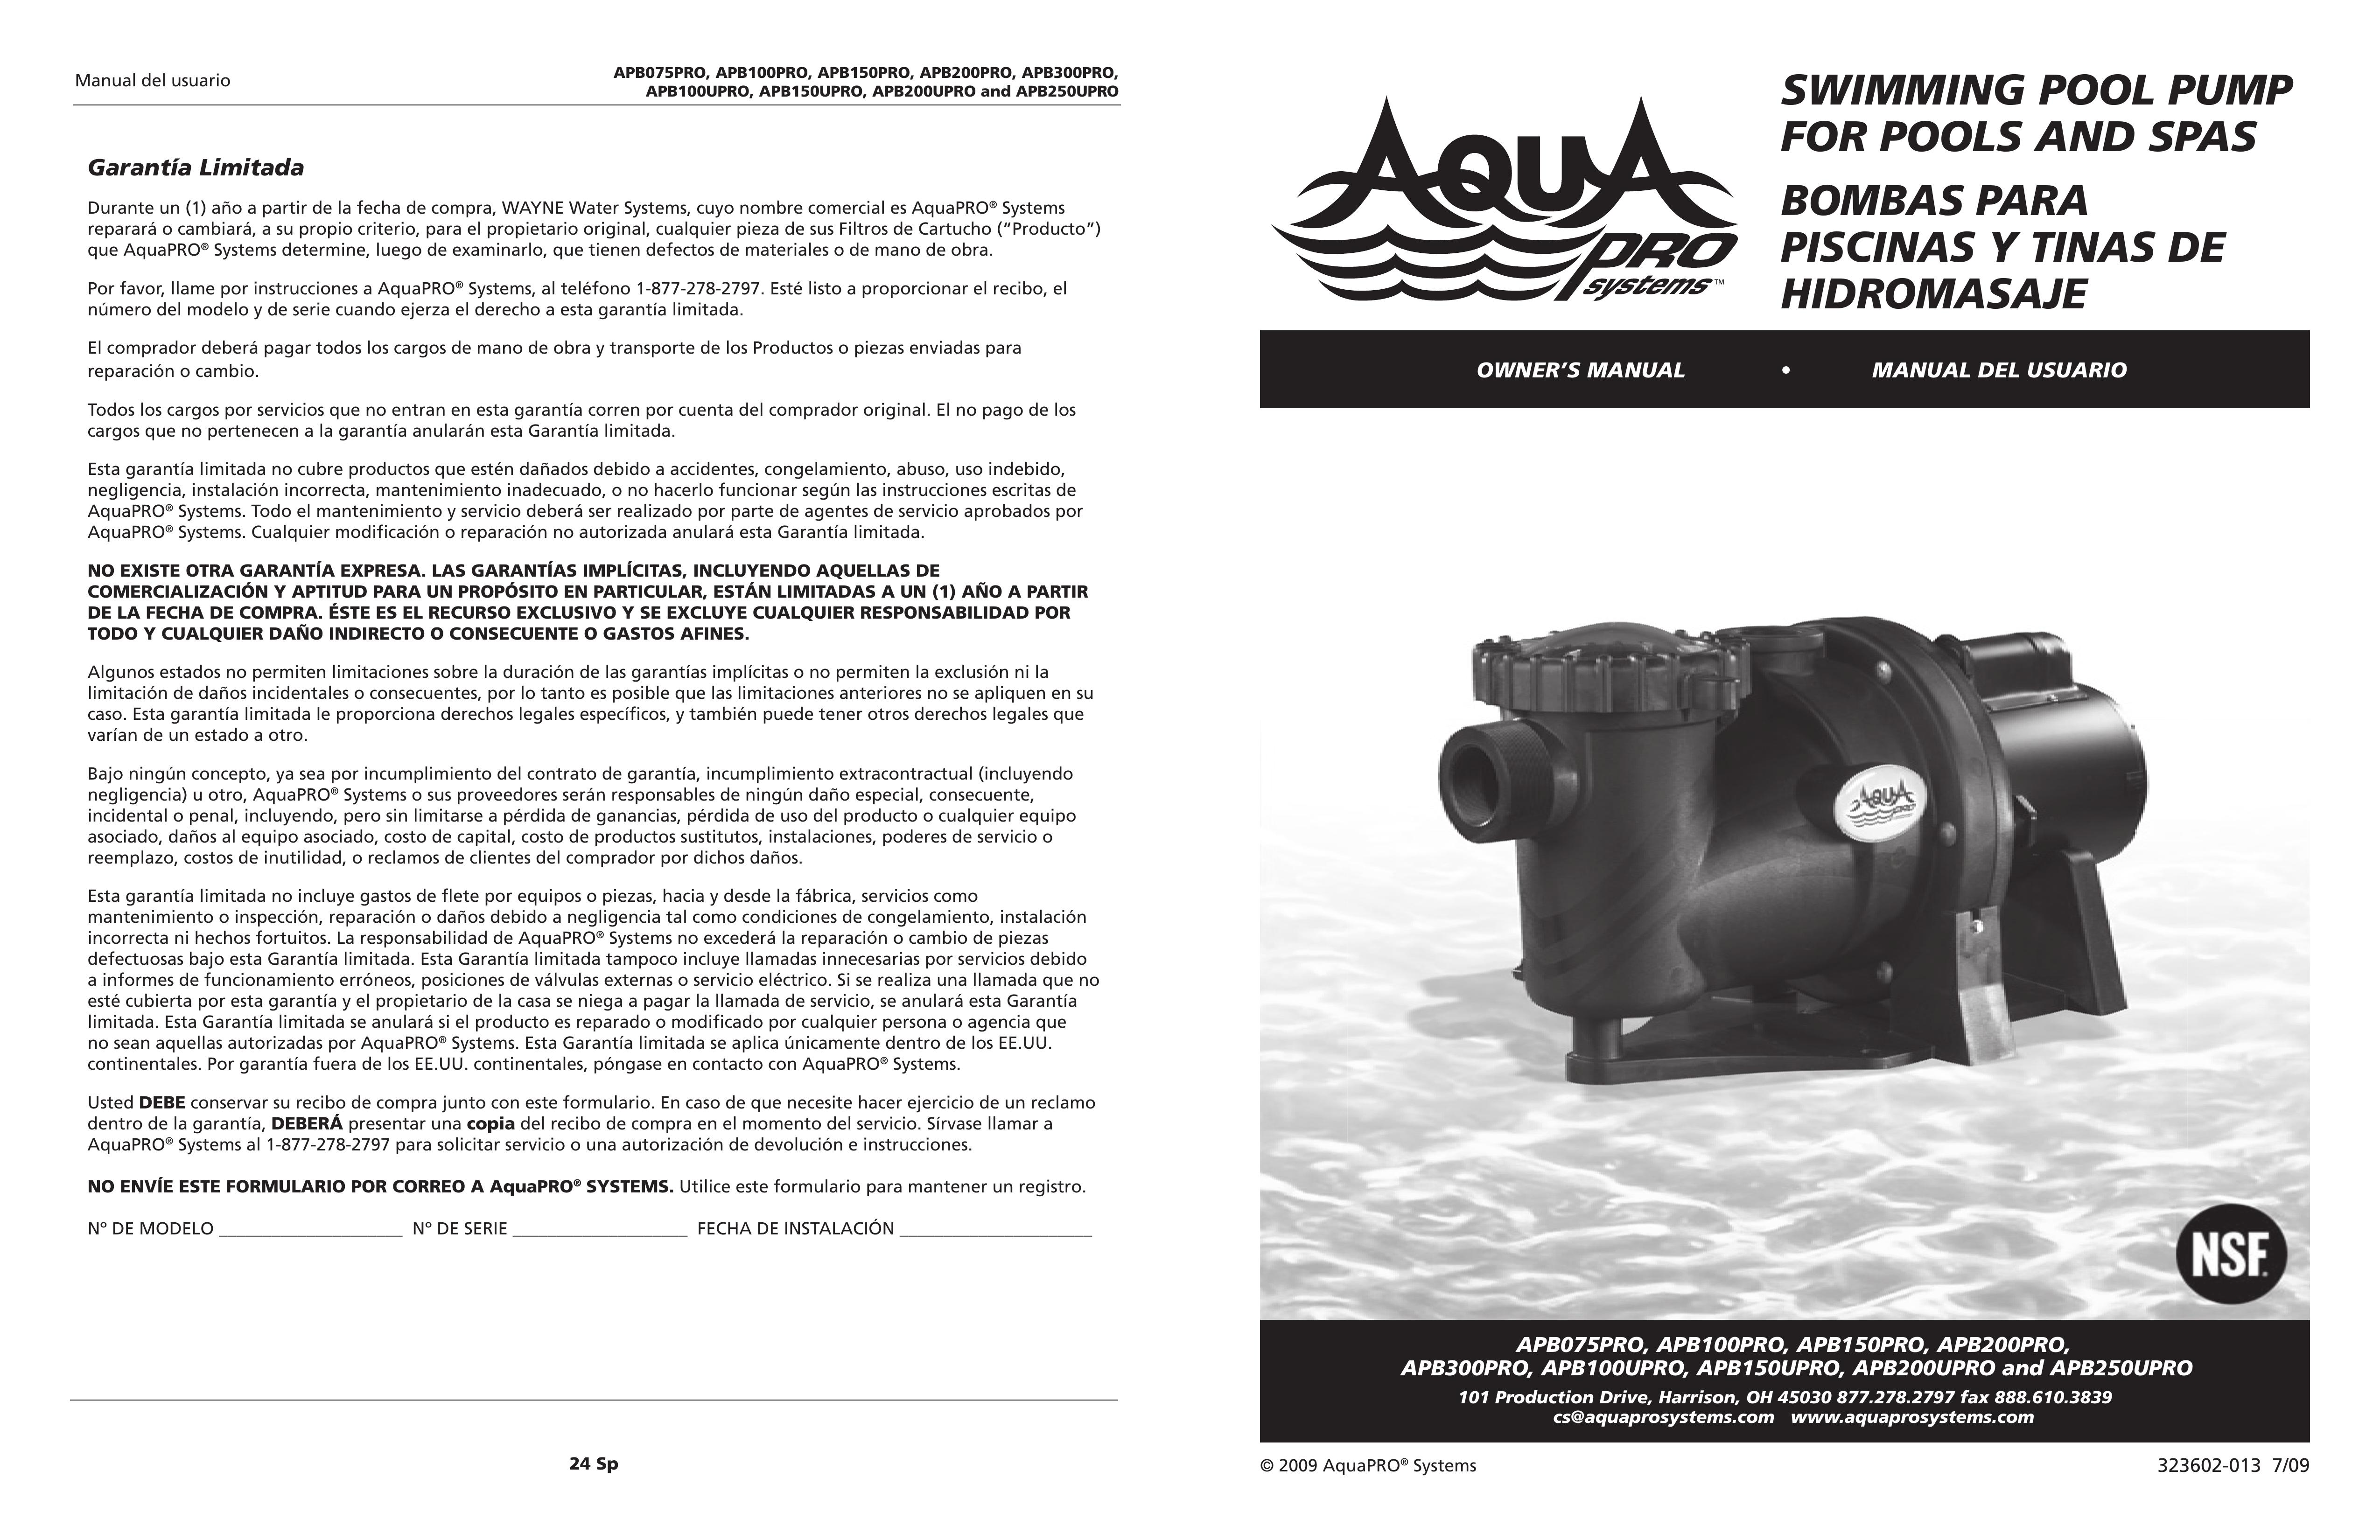 AquaPRO APB300PRO Swimming Pool Pump User Manual